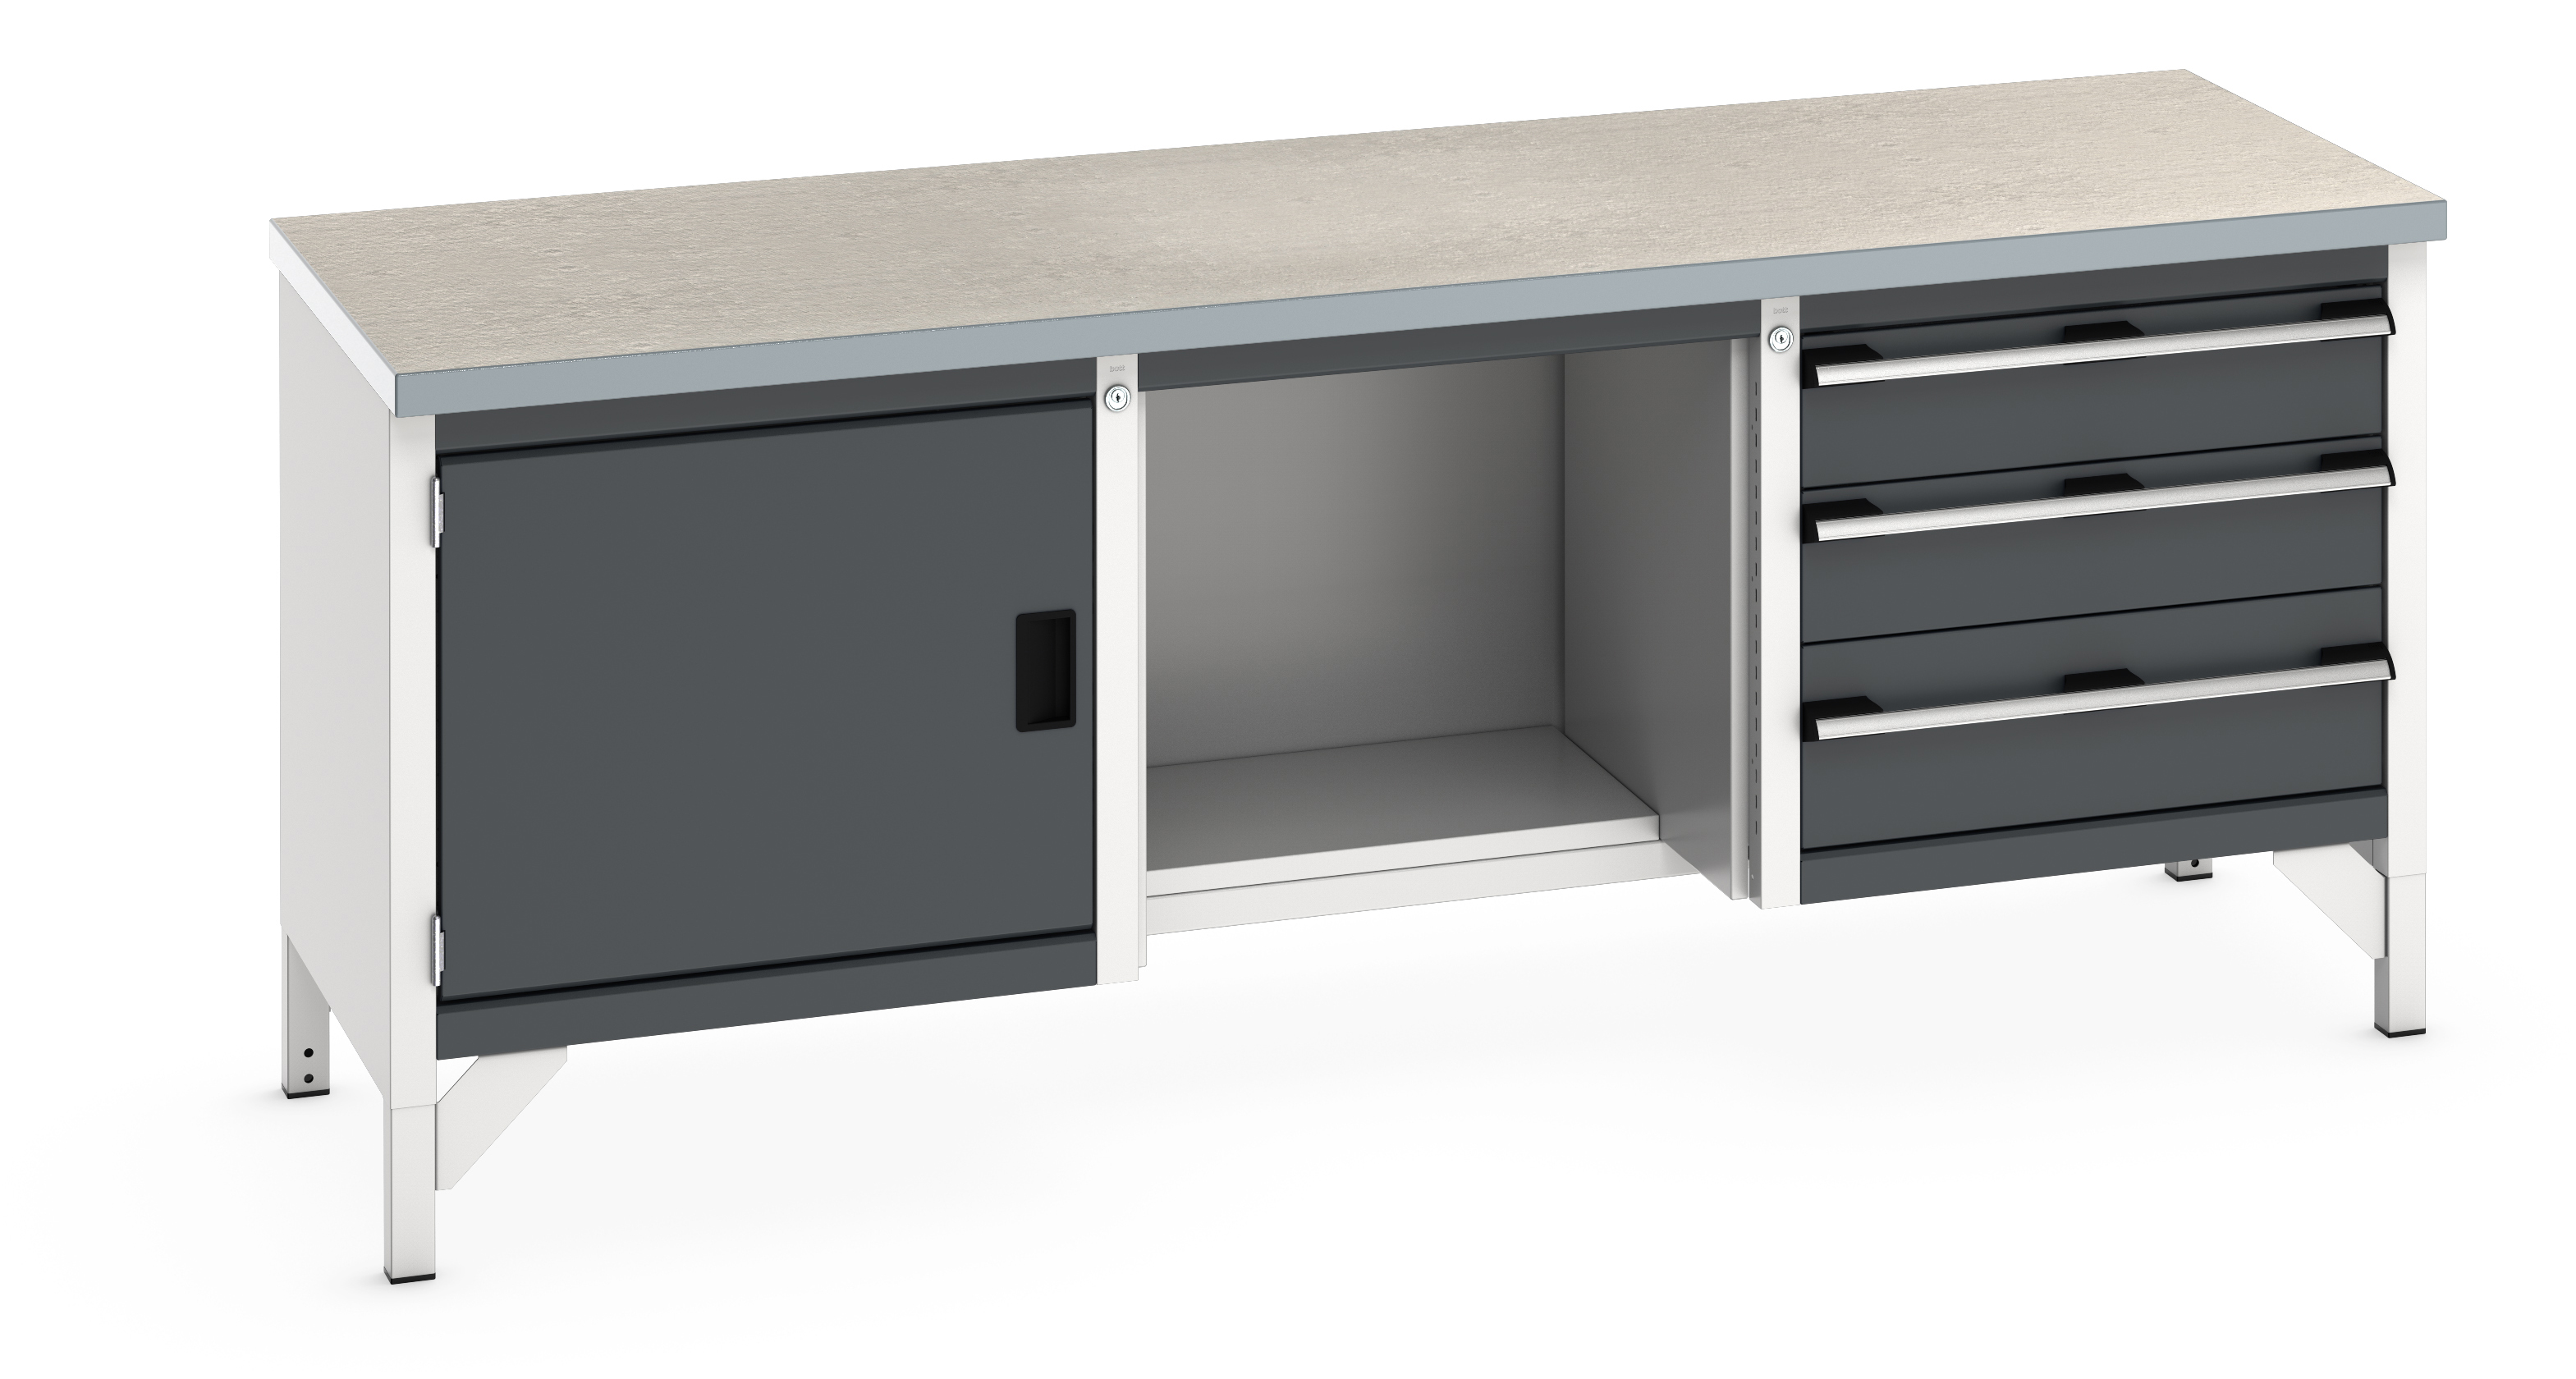 Bott Cubio Storage Bench With Full Cupboard / Open With Half Depth Base Shelf / 3 Drawer Cabinet - 41002072.19V